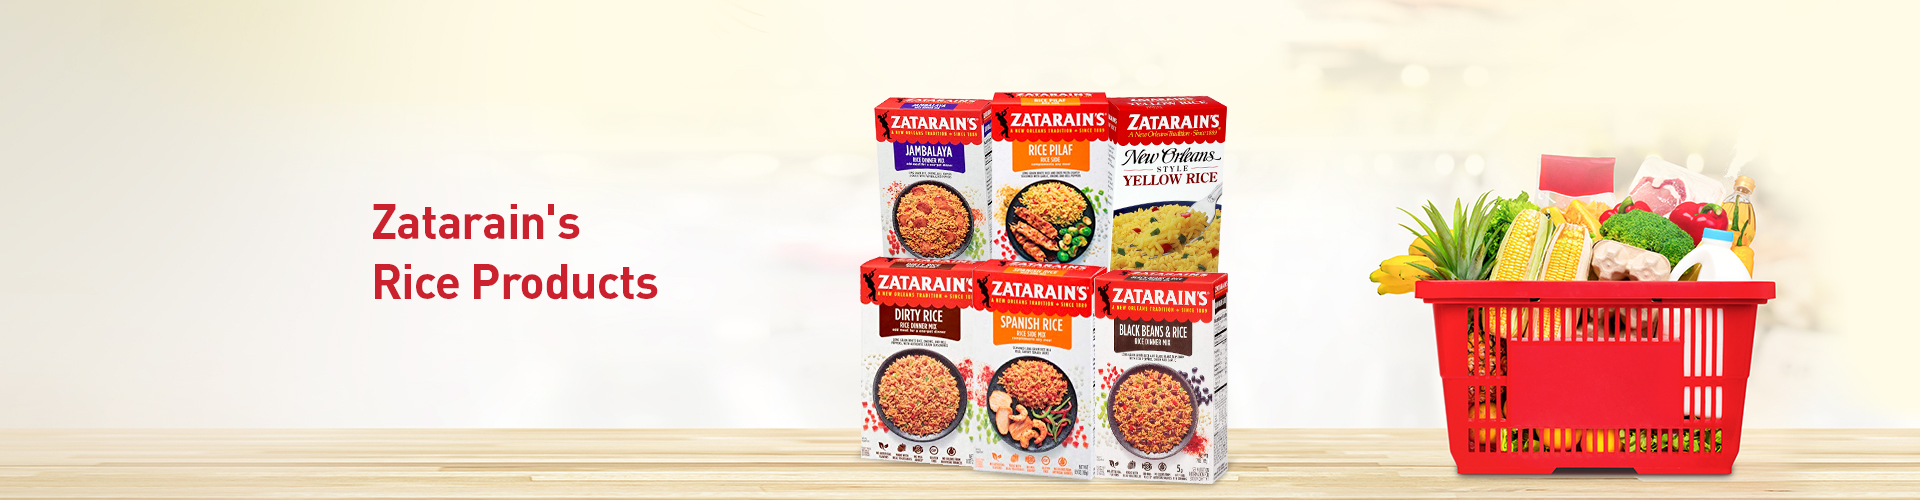 Zatarains Rice Products